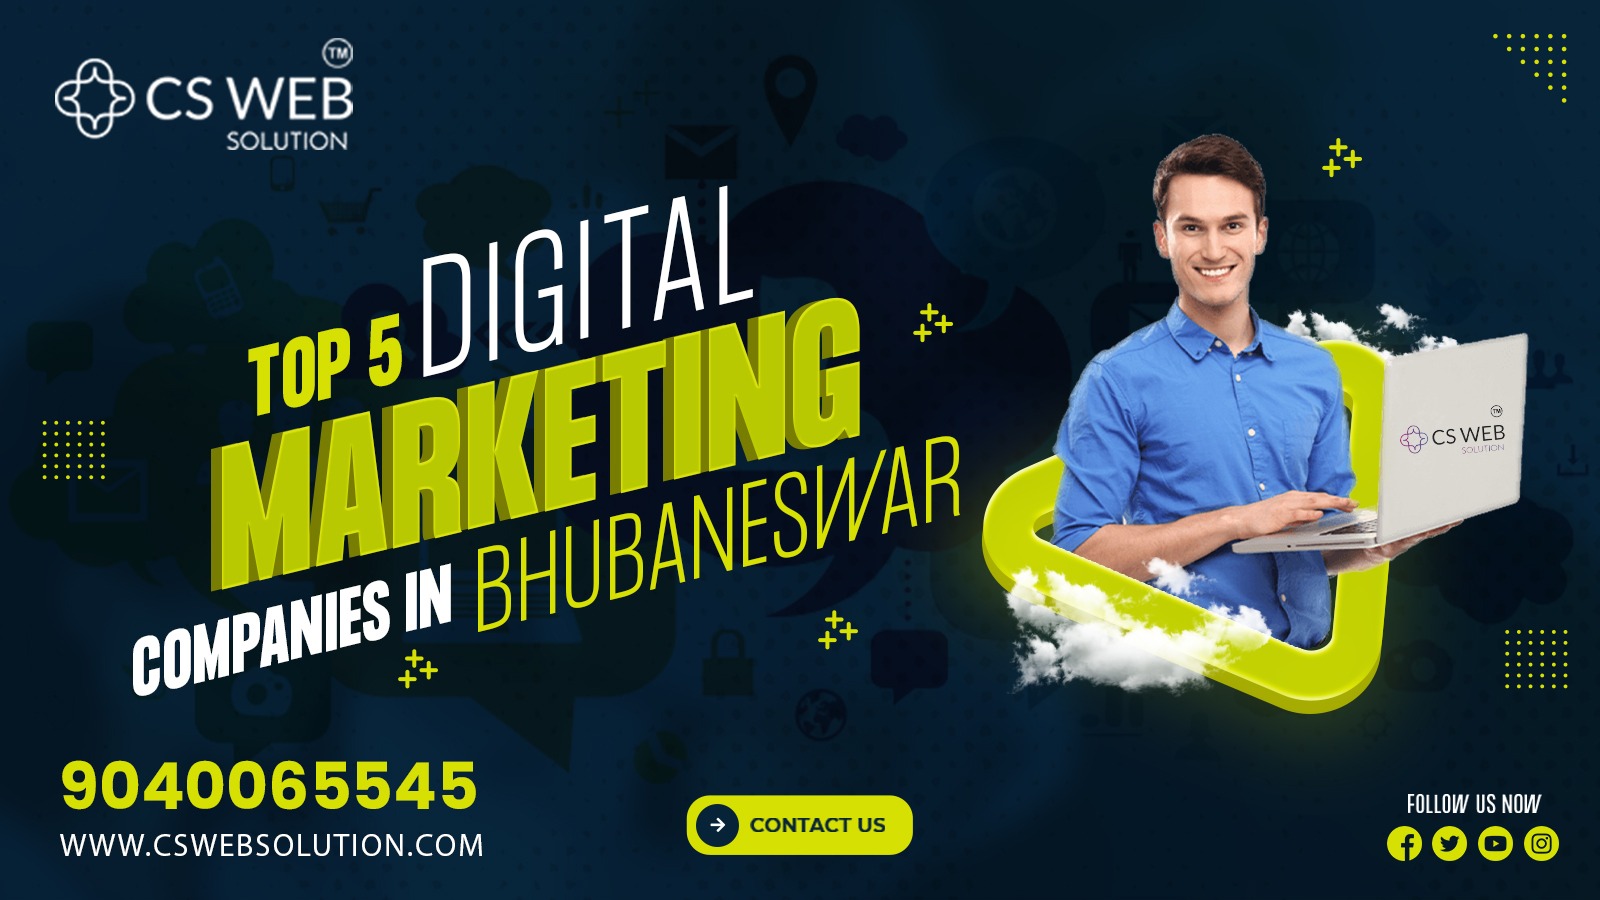 The Professional Digital Marketing Agency in Bhubaneswar, Odisha Since 2012